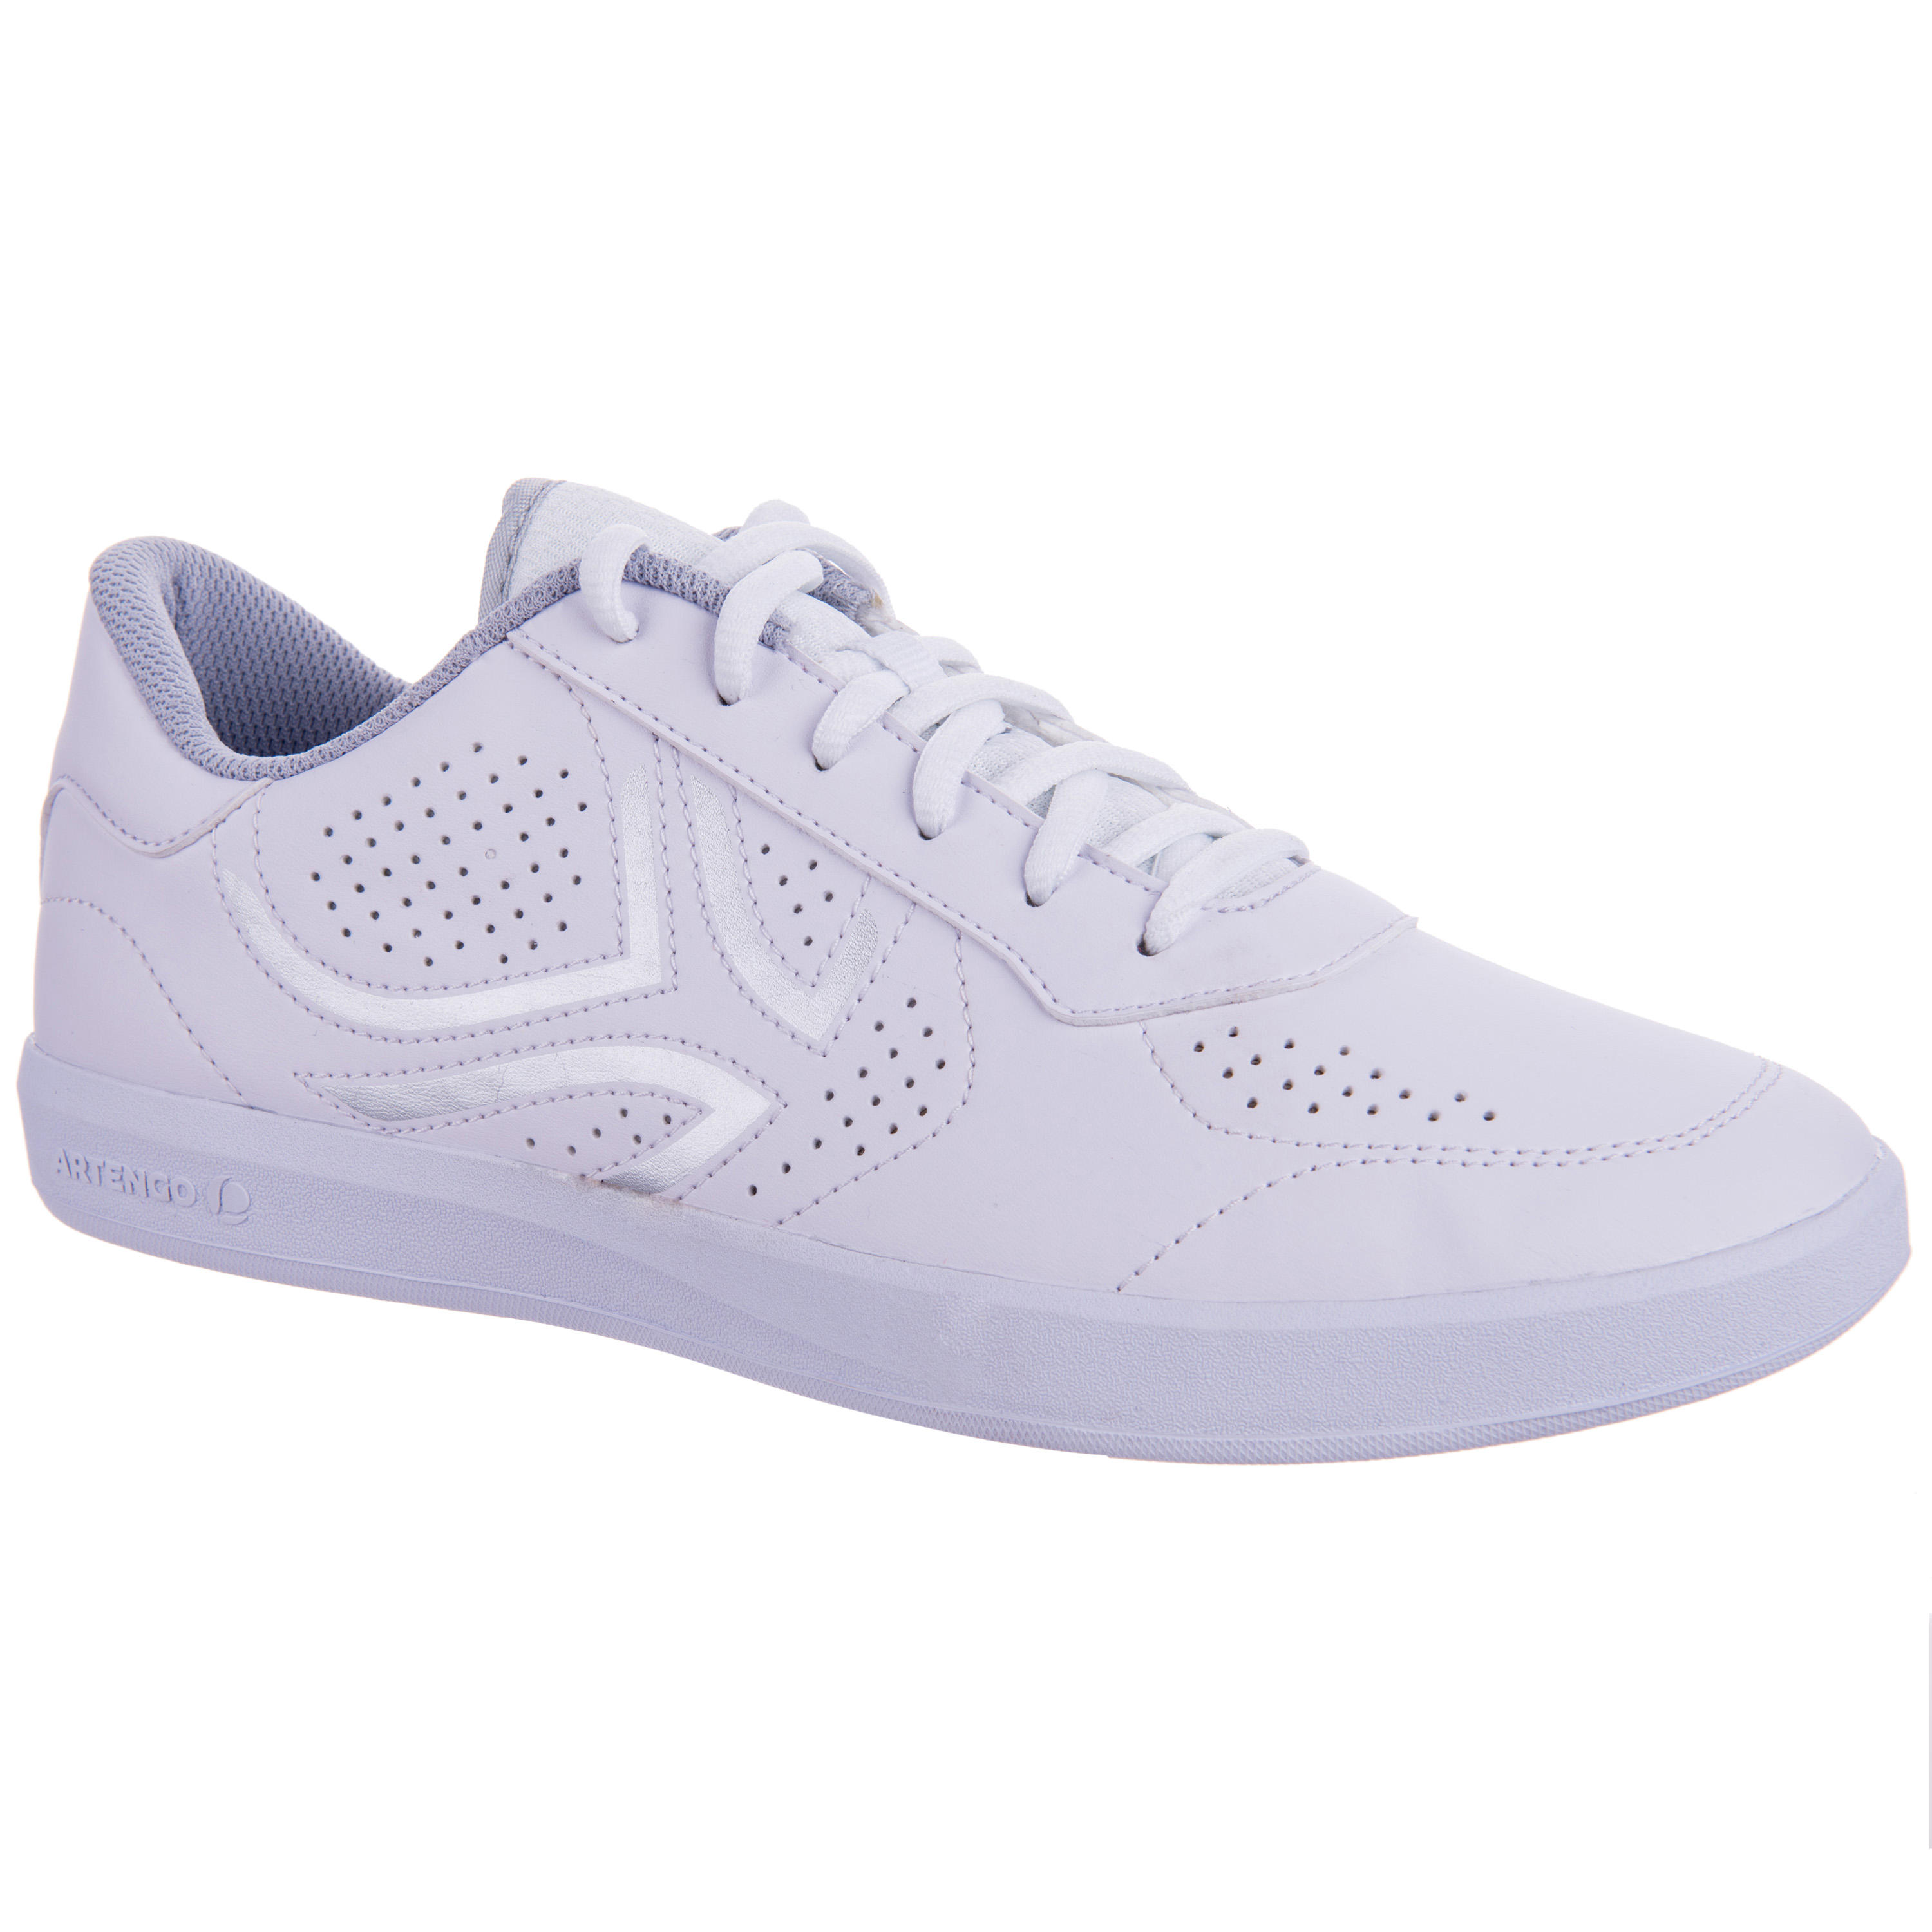 Women's Tennis Shoes TS100 - White